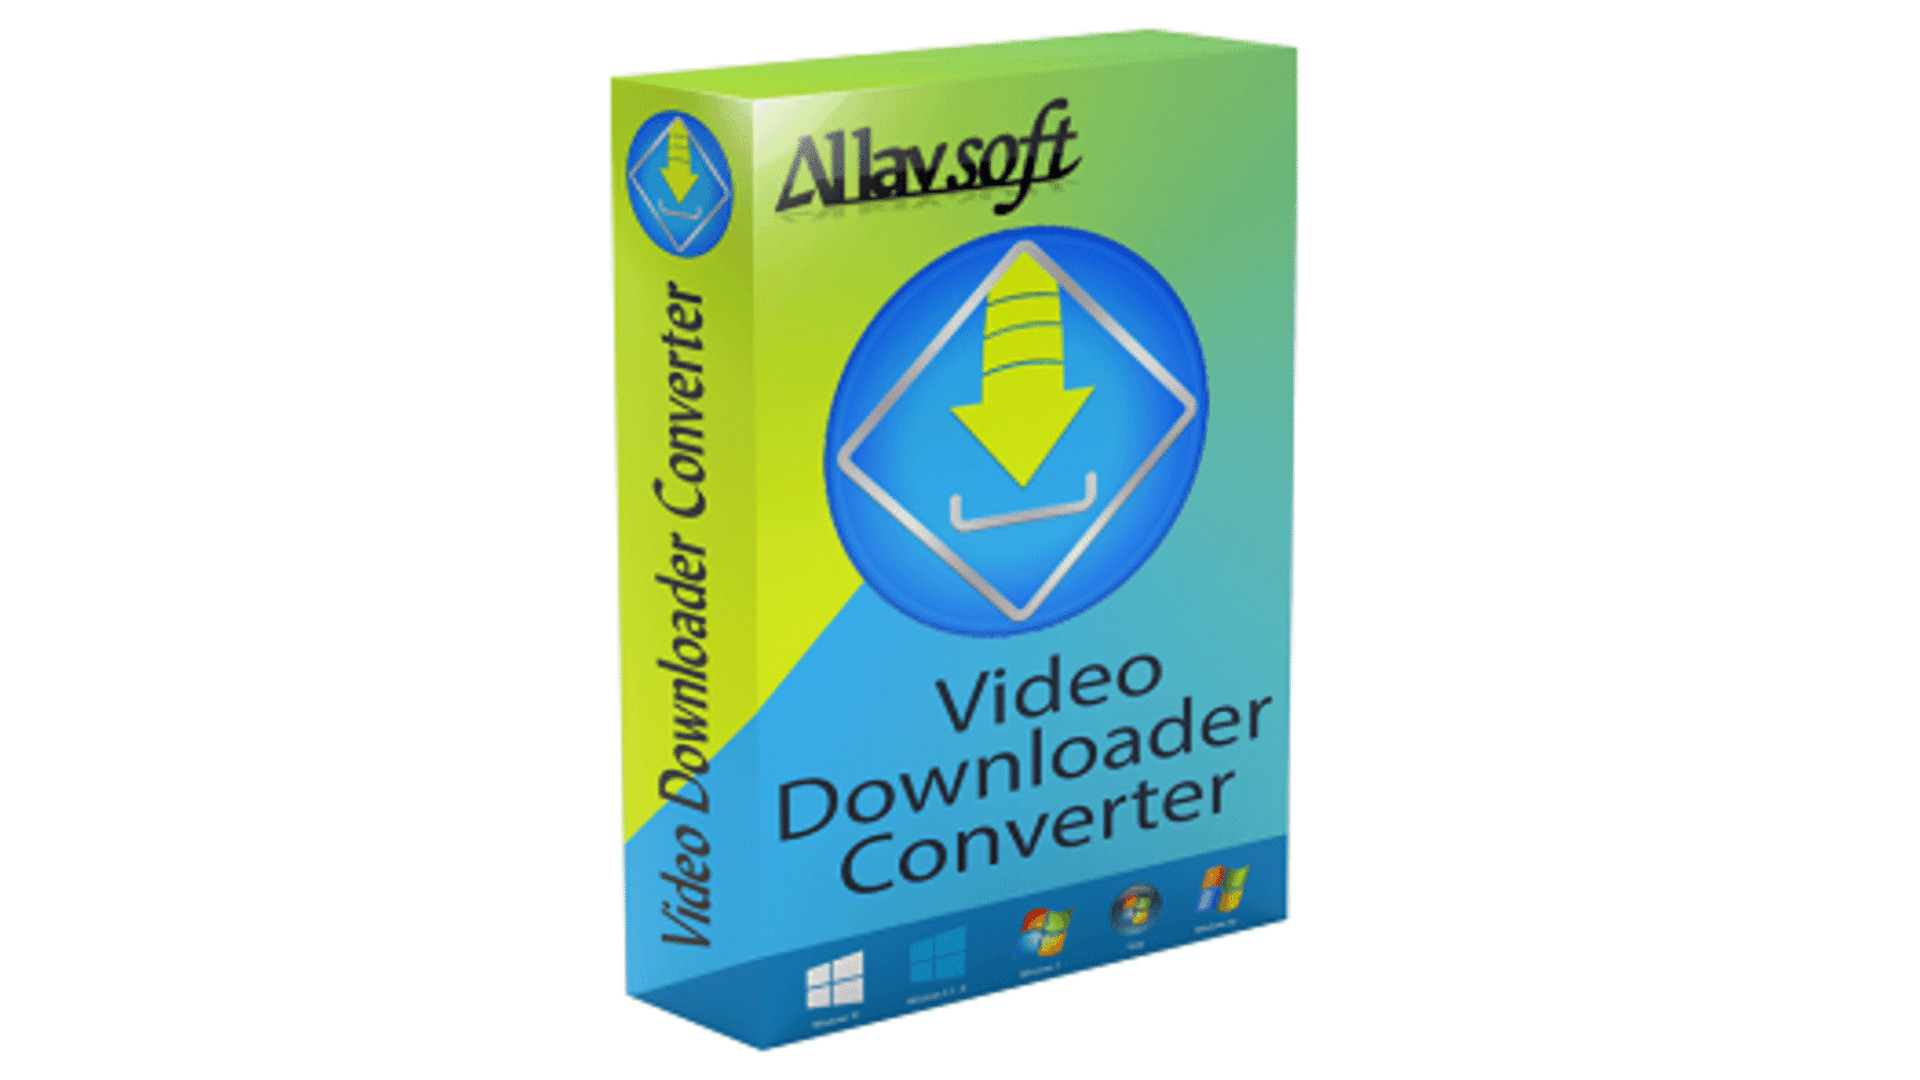 Allavsoft Video Downloader and Converter for Windows CD Key USD 2.75